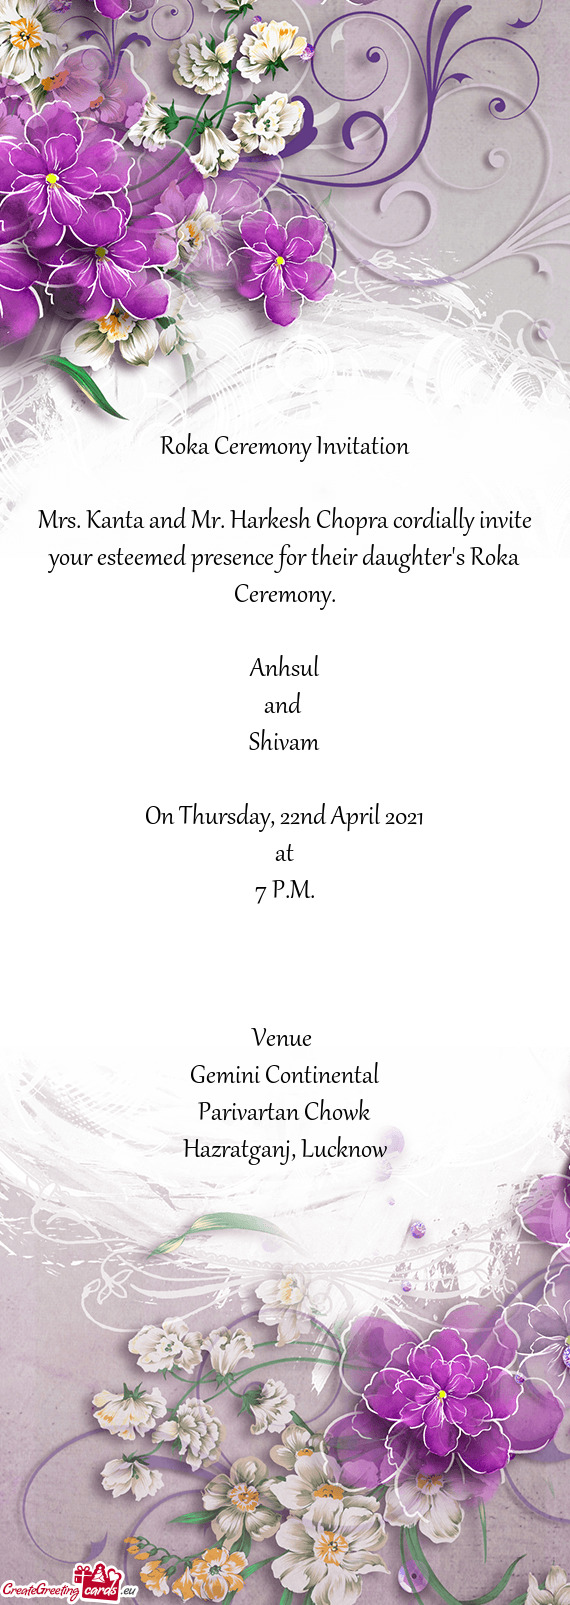 Mrs. Kanta and Mr. Harkesh Chopra cordially invite your esteemed presence for their daughter's Roka